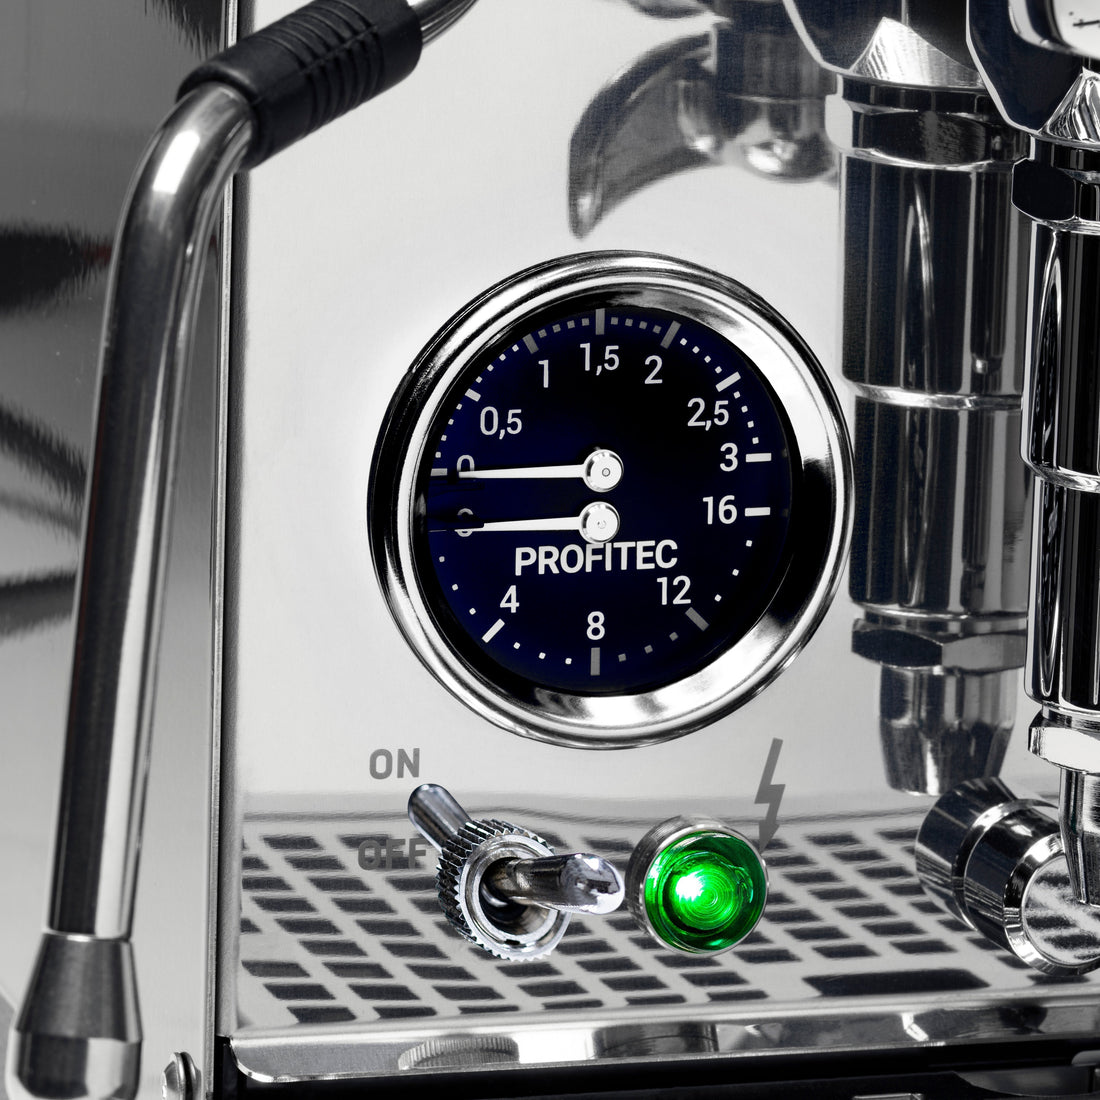 Profitec Pro 400 Espresso Machine With Flow Control and Tiger Maple